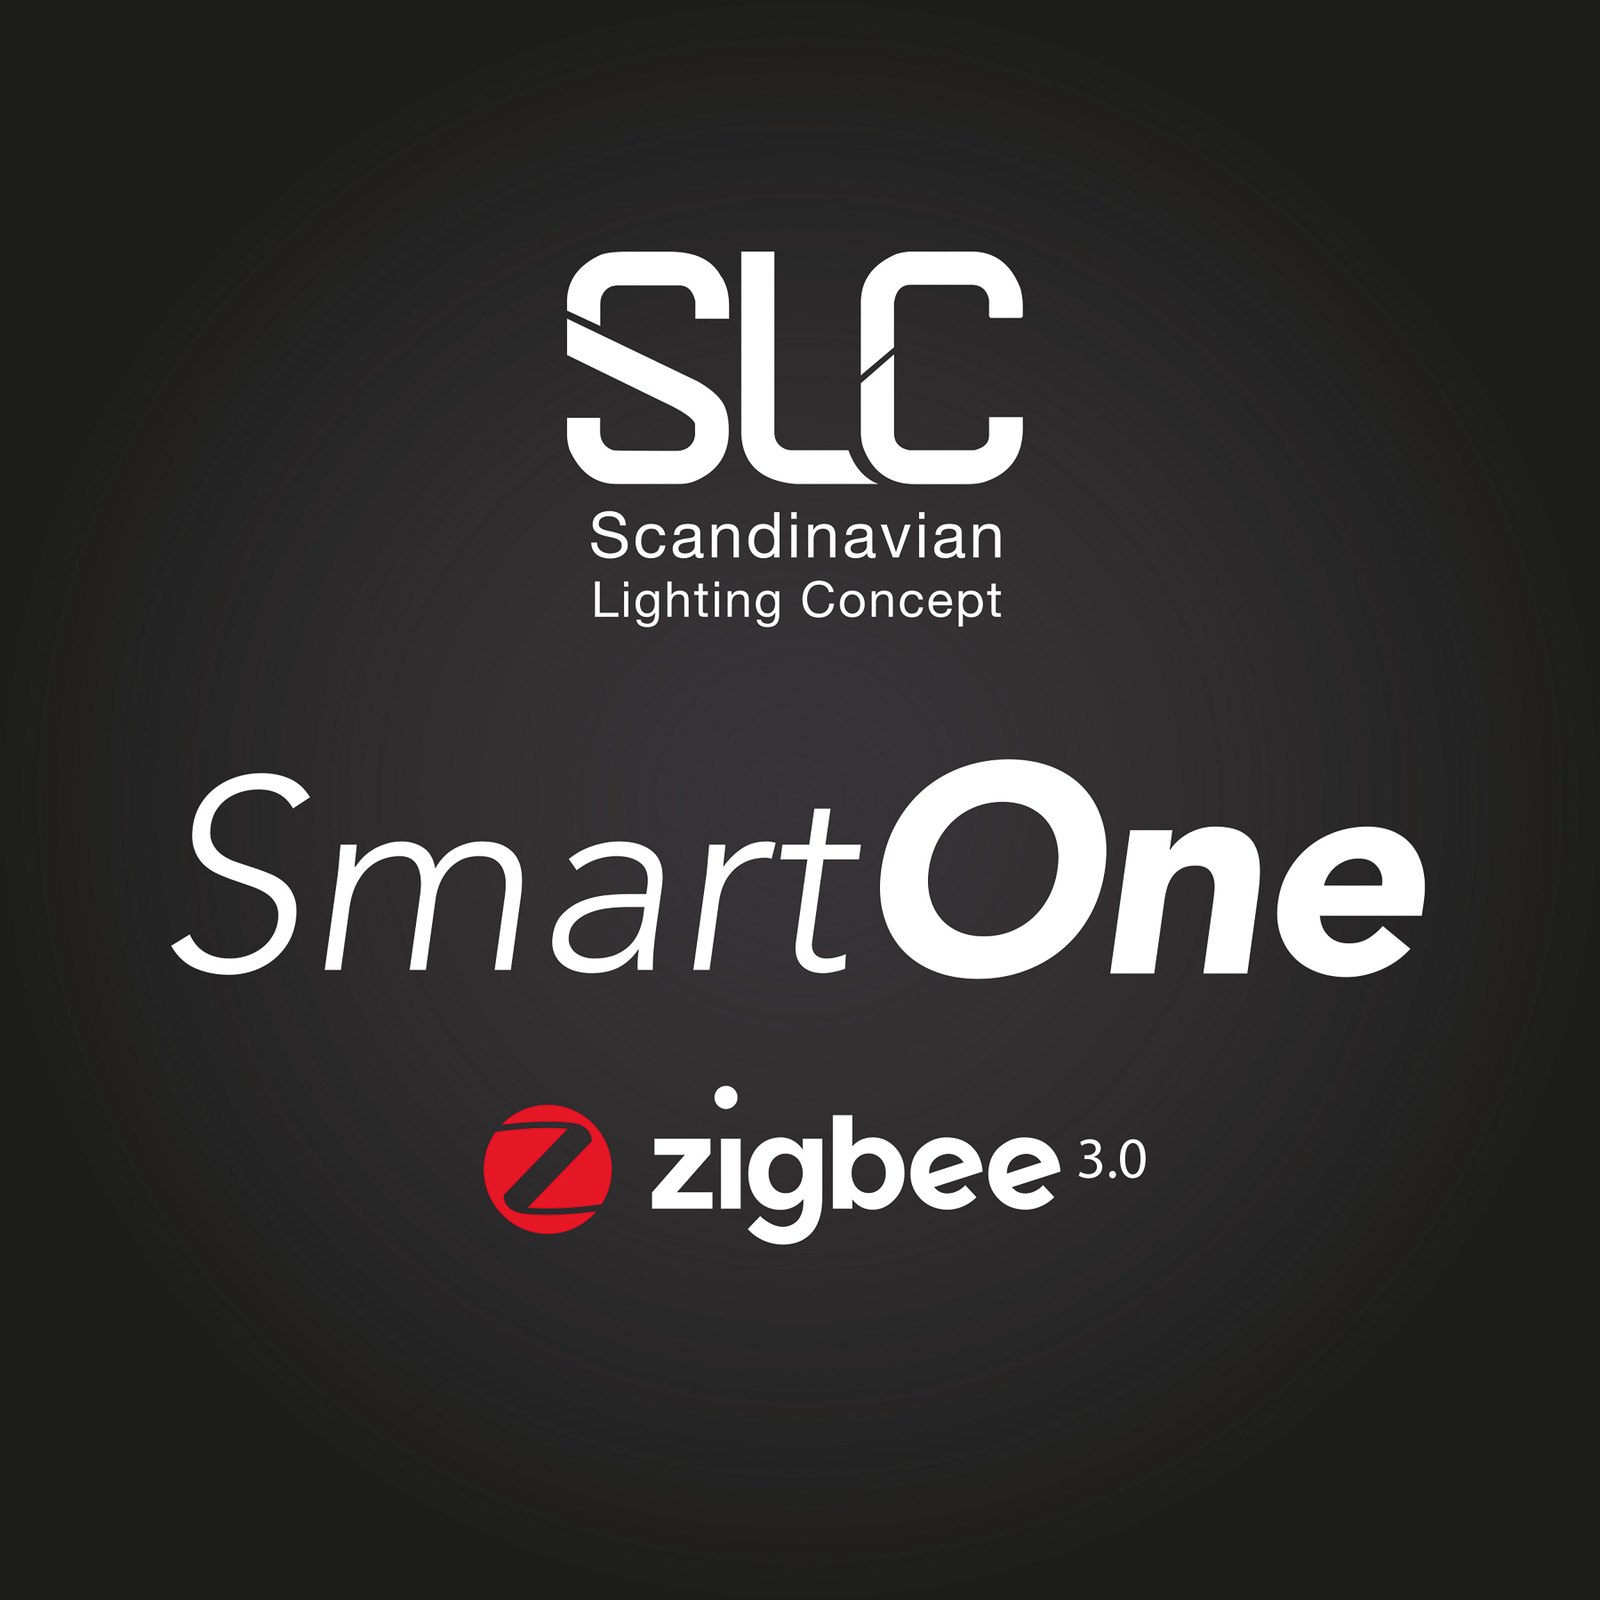 SLC SmartOne signal converter ZigBee to Dali/1-10V